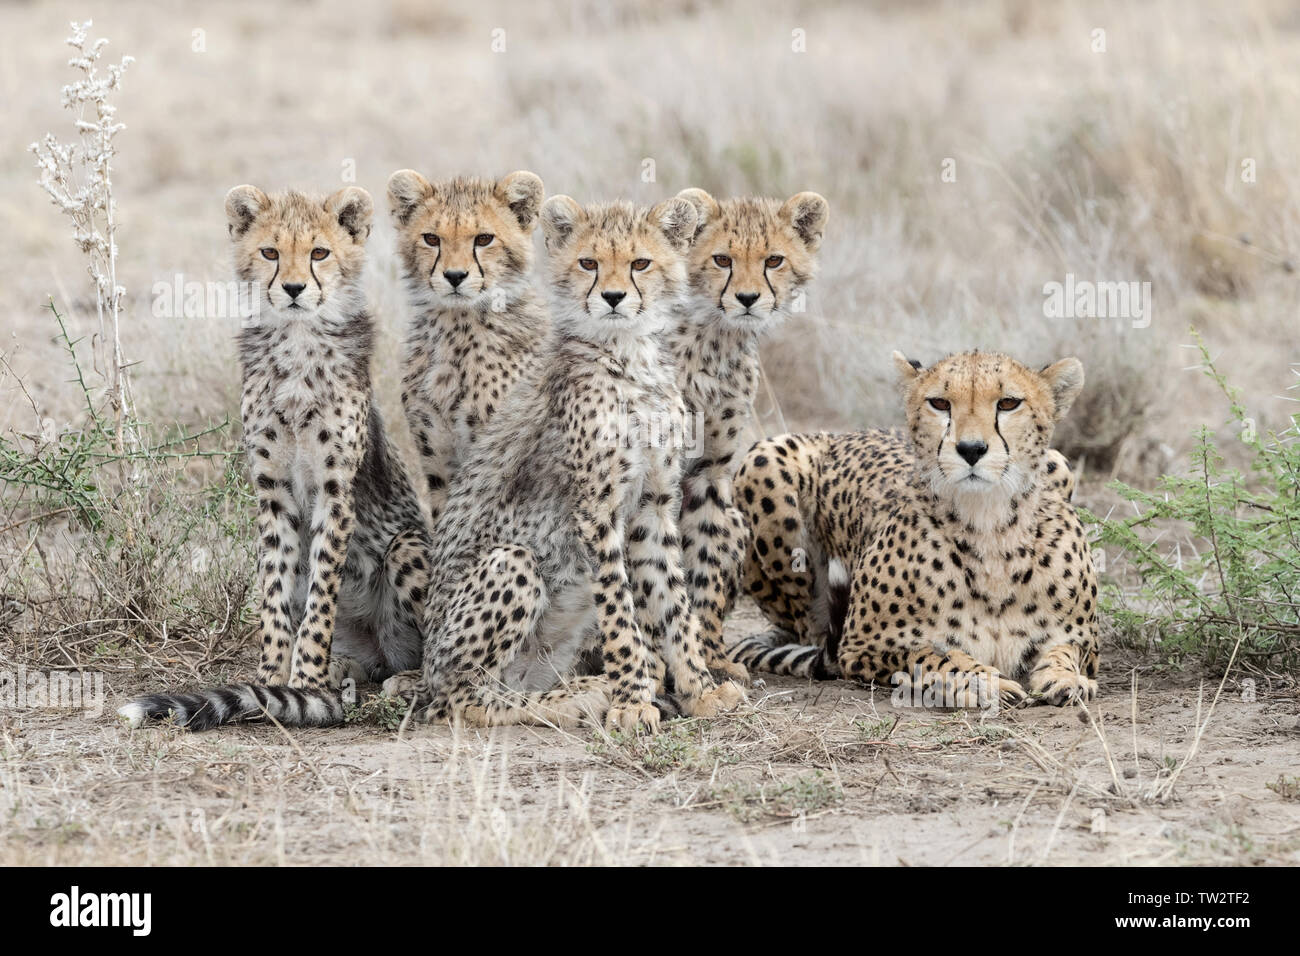 Gepard (Acinonyx jubatus) Porträt, Mutter und Jungen mit Blick auf die Kamera, Ndutu, Tansania Stockfoto